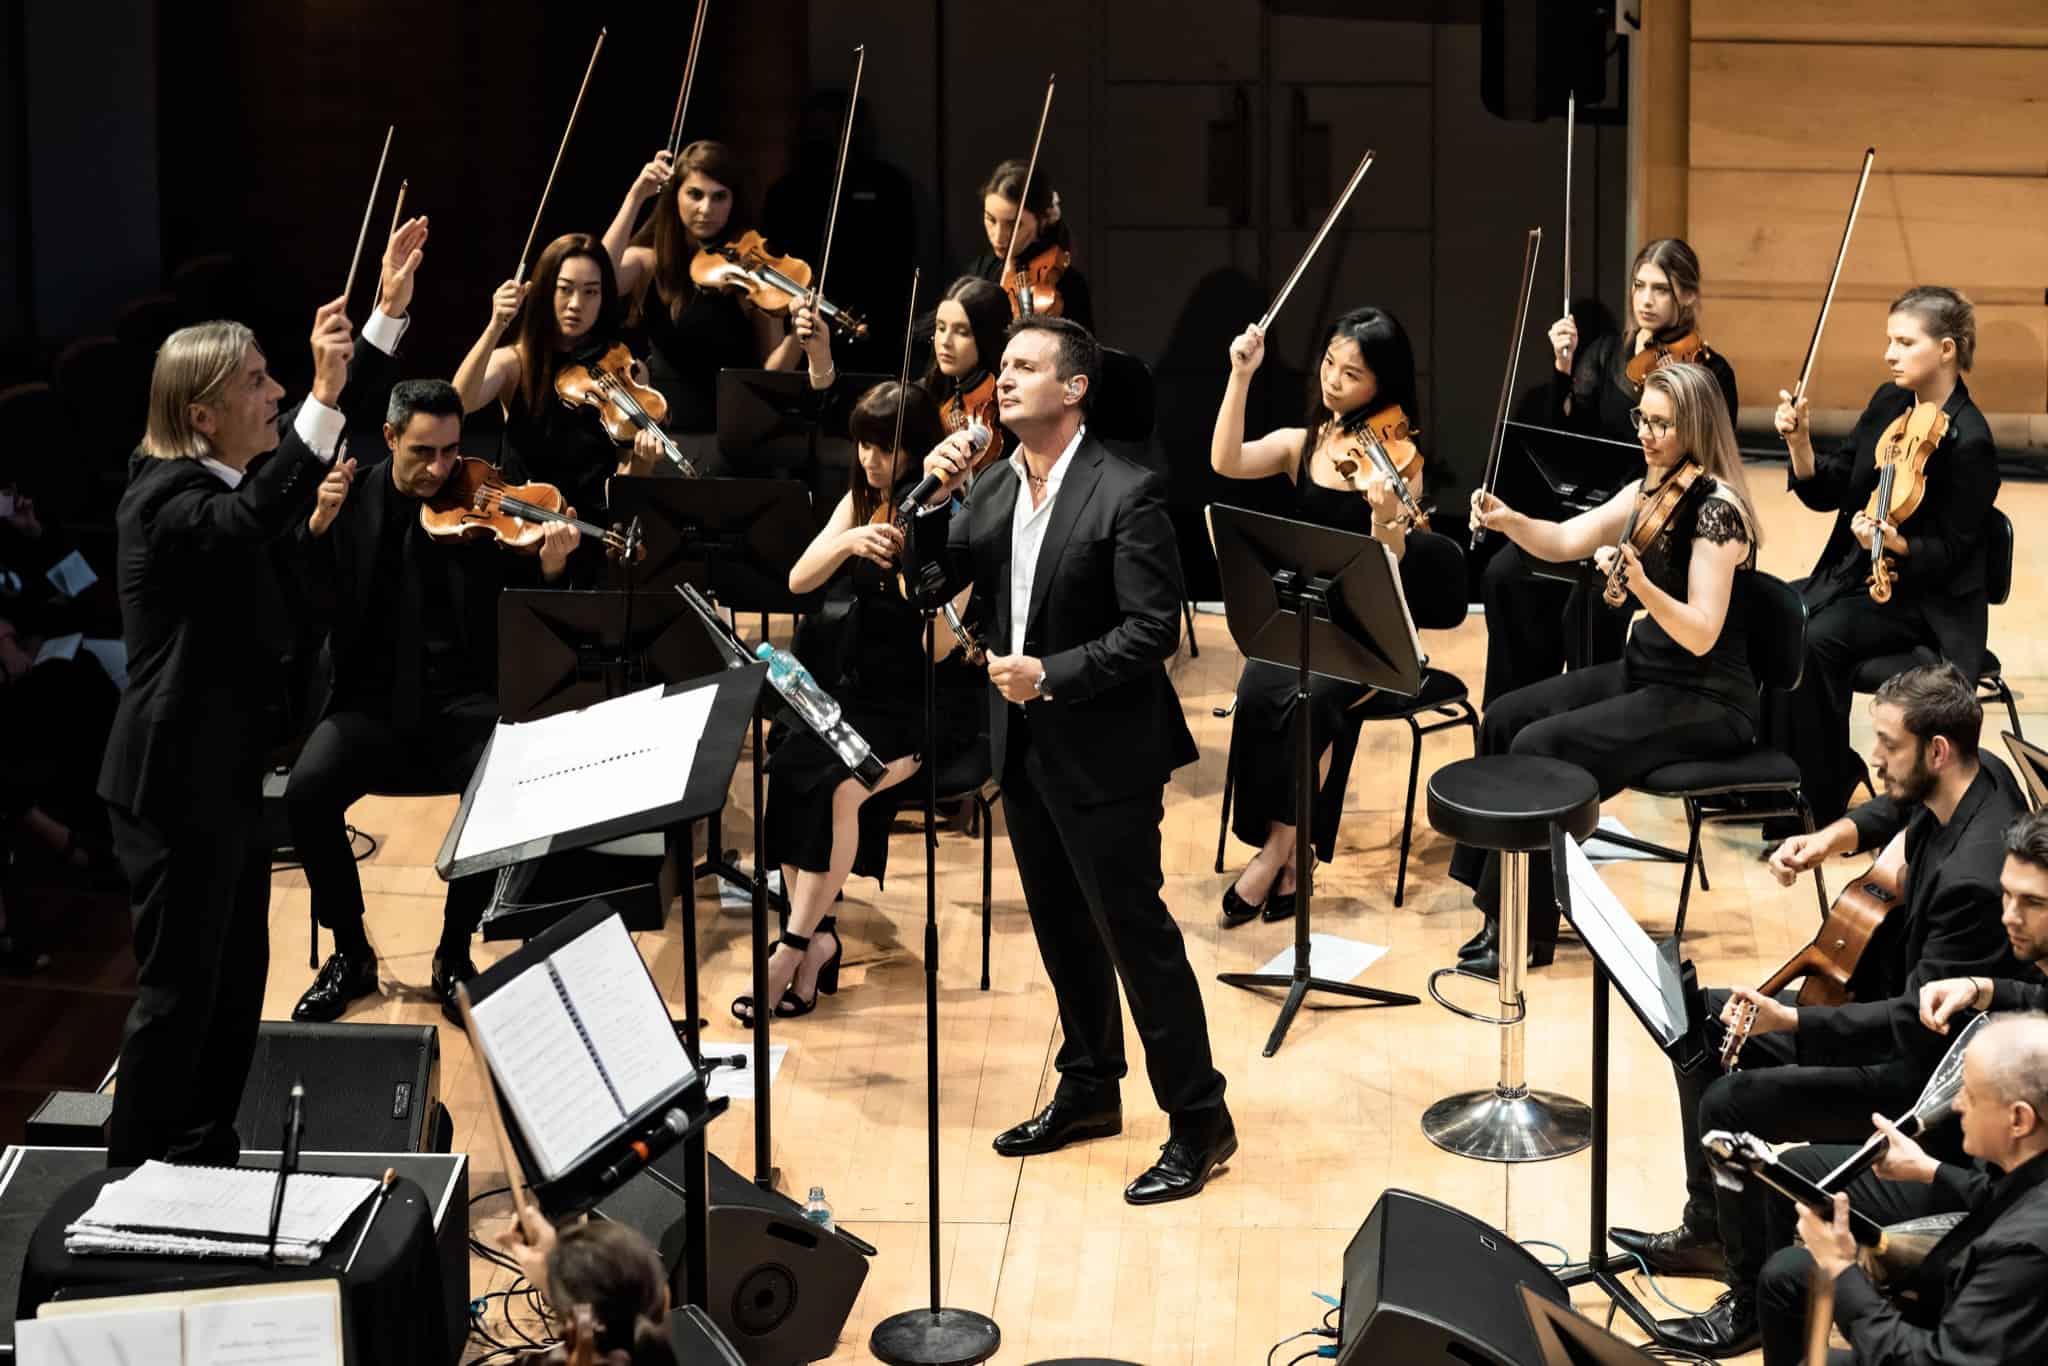 Miki Theodorakis Tribute Concert at City Recital Hall a resounding success 52